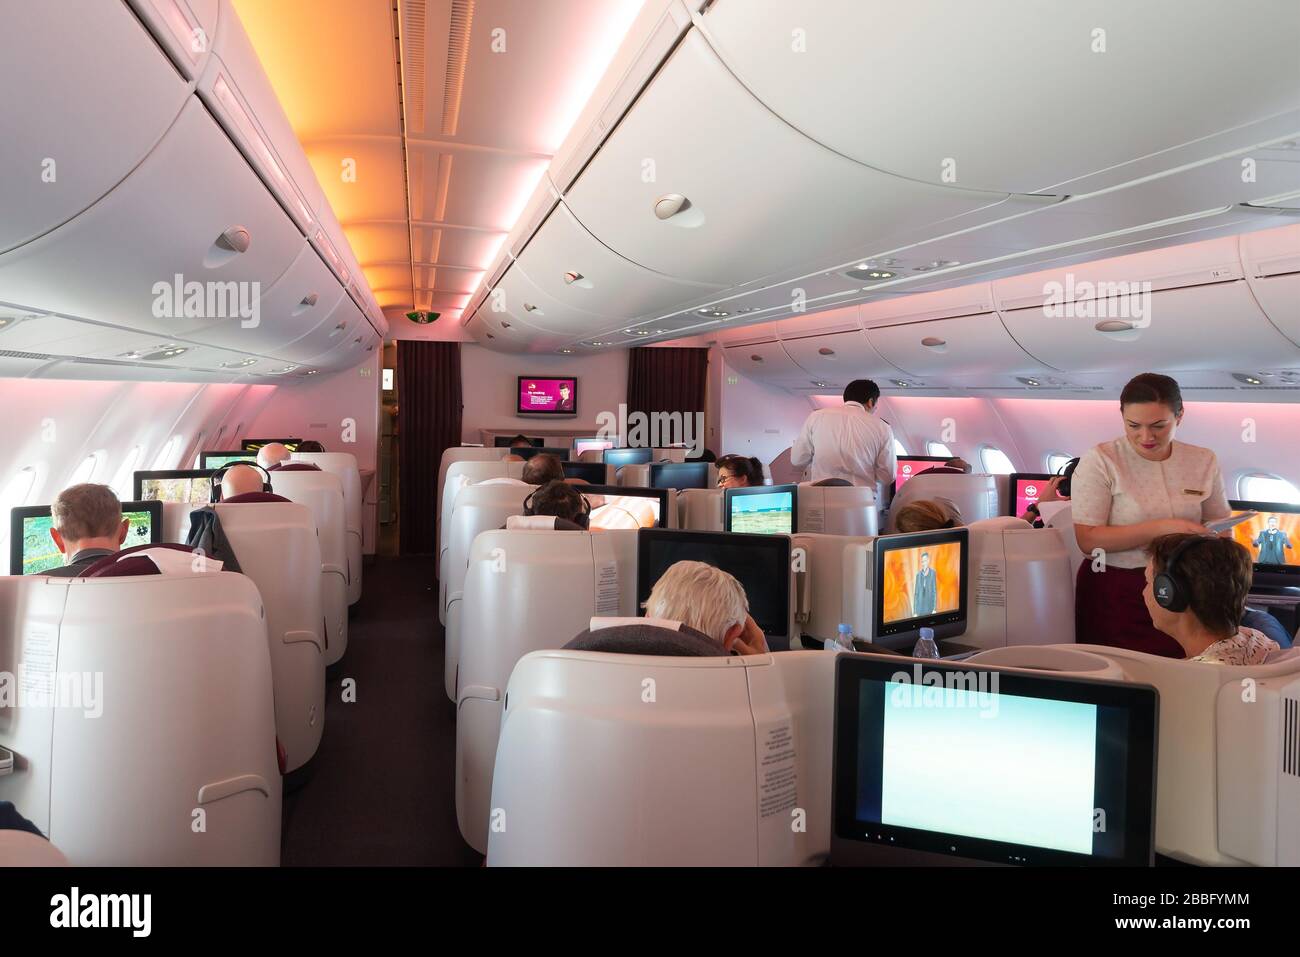 Qatar Airways Airbus A380 Business Class cabin with reverse herringbone seats. Skytrax five stars airline with hub in Doha. Qatari flight attendant. Stock Photo